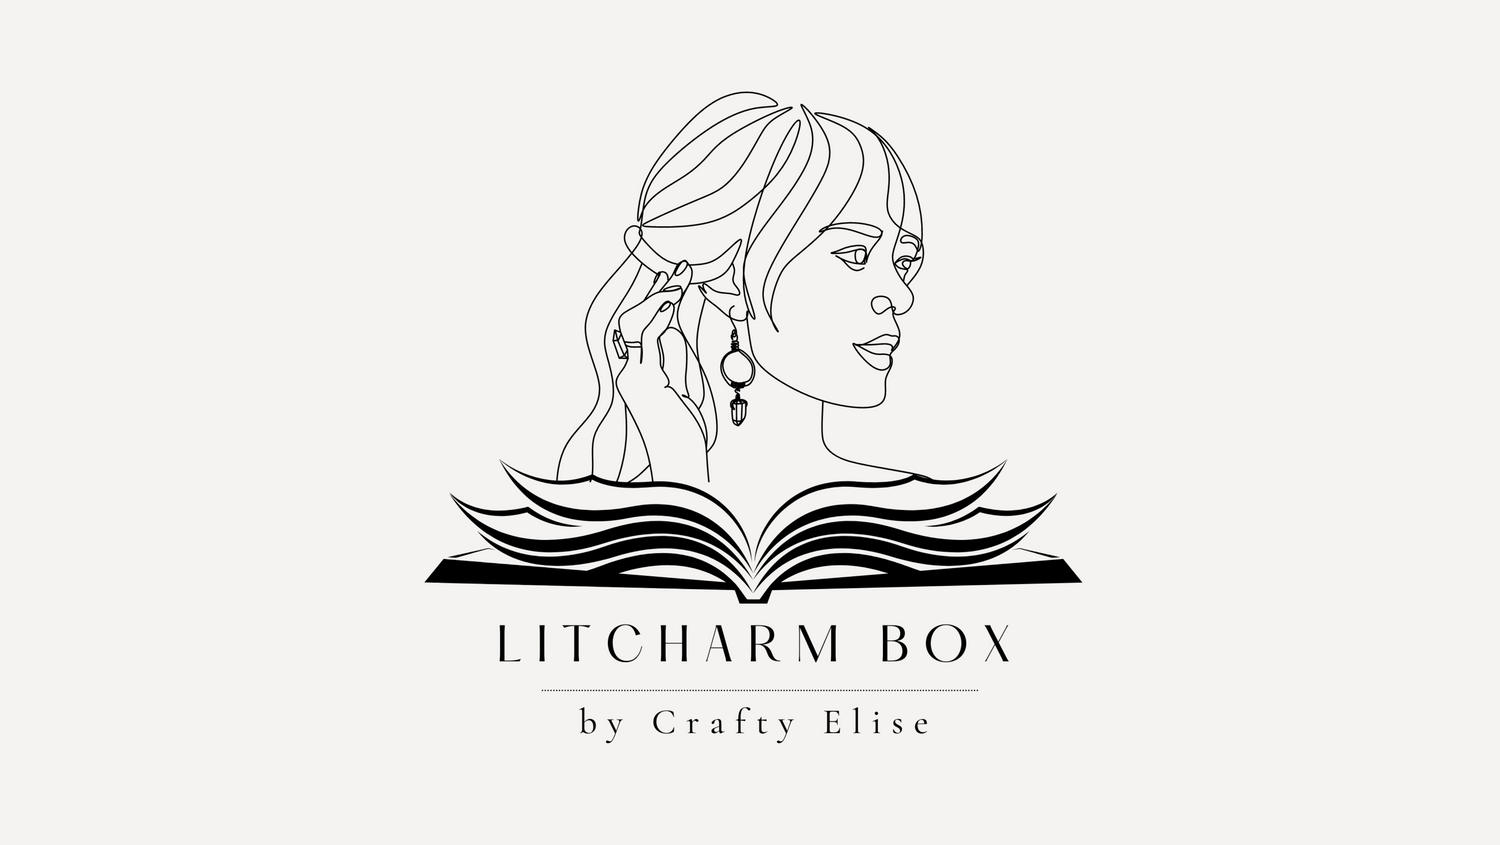 LitCharm Box